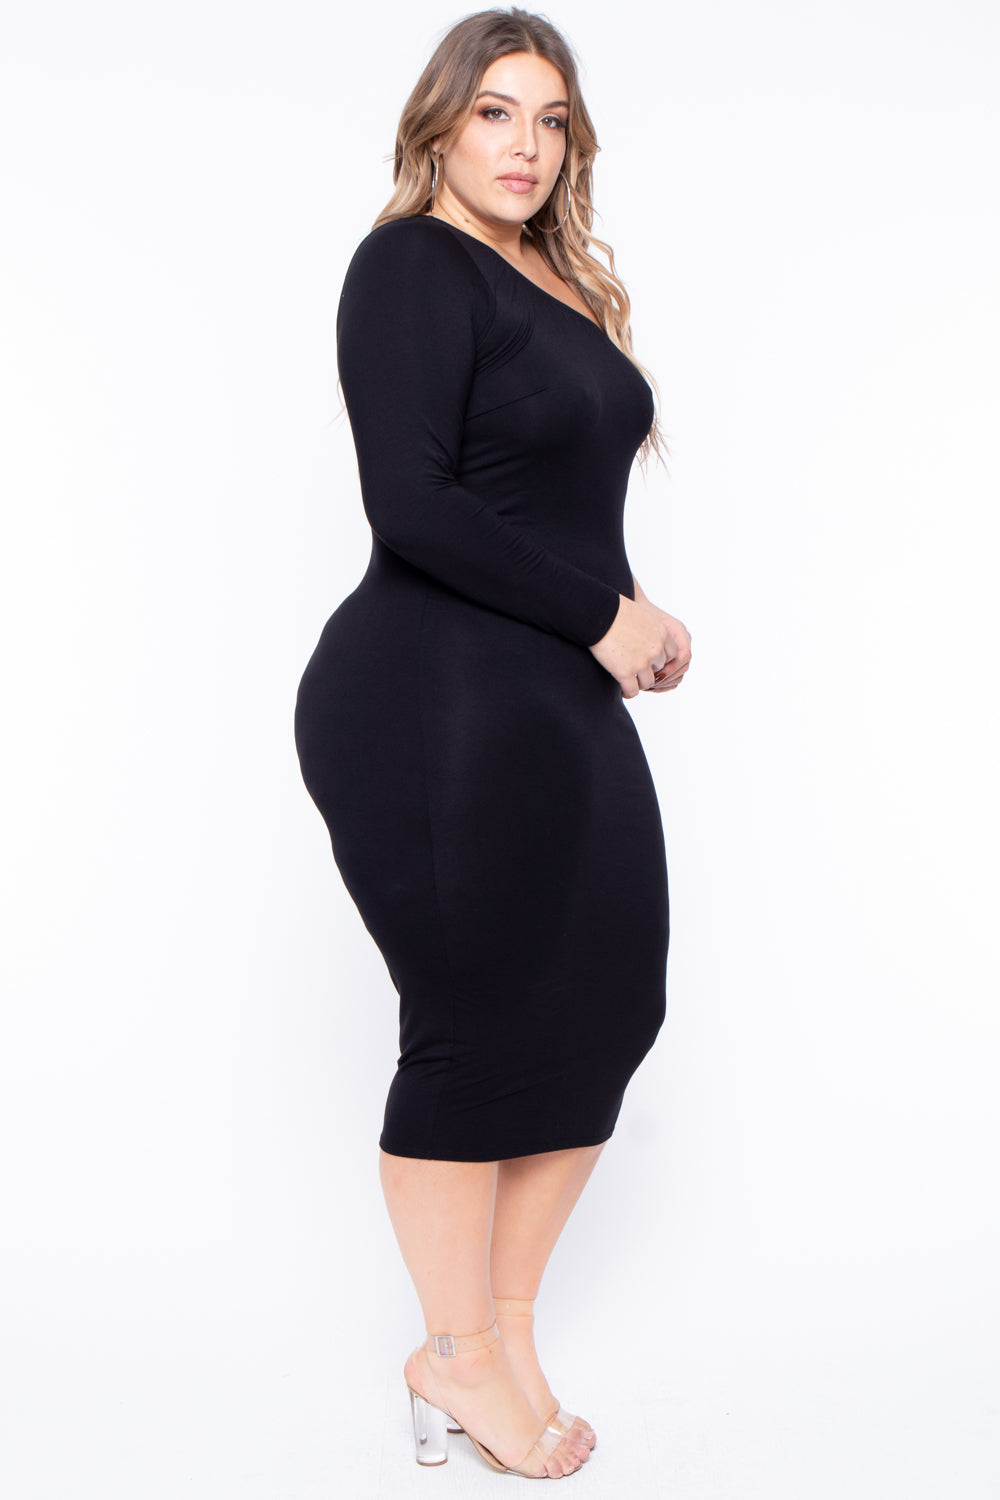 Plus Size Ebony One Shoulder Dress - Black - Curvy Sense